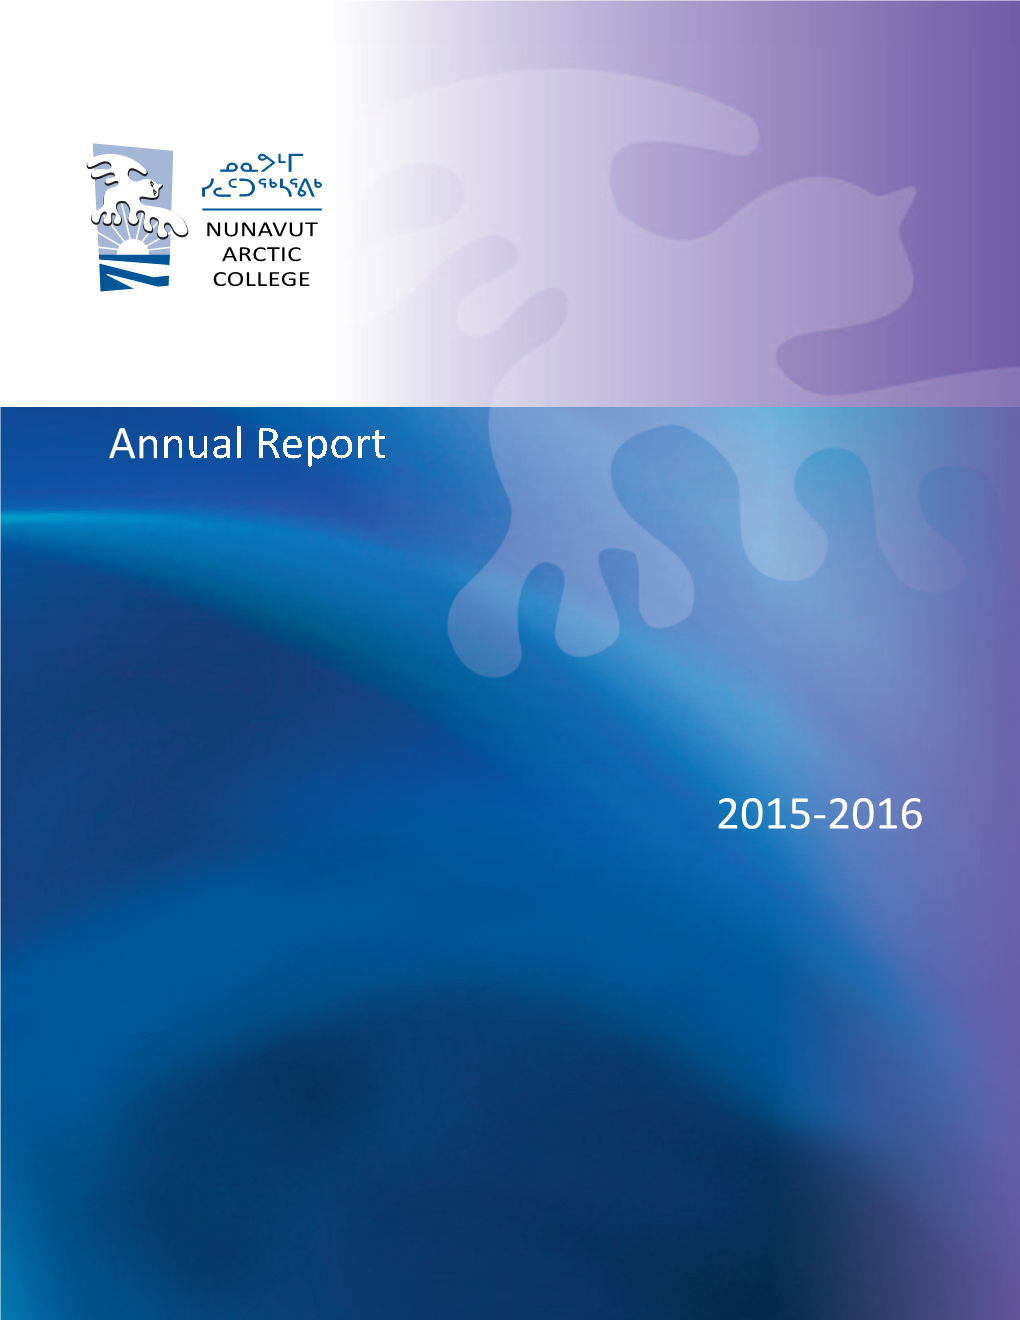 2015-2016 Annual Report for Nunavut Arctic College